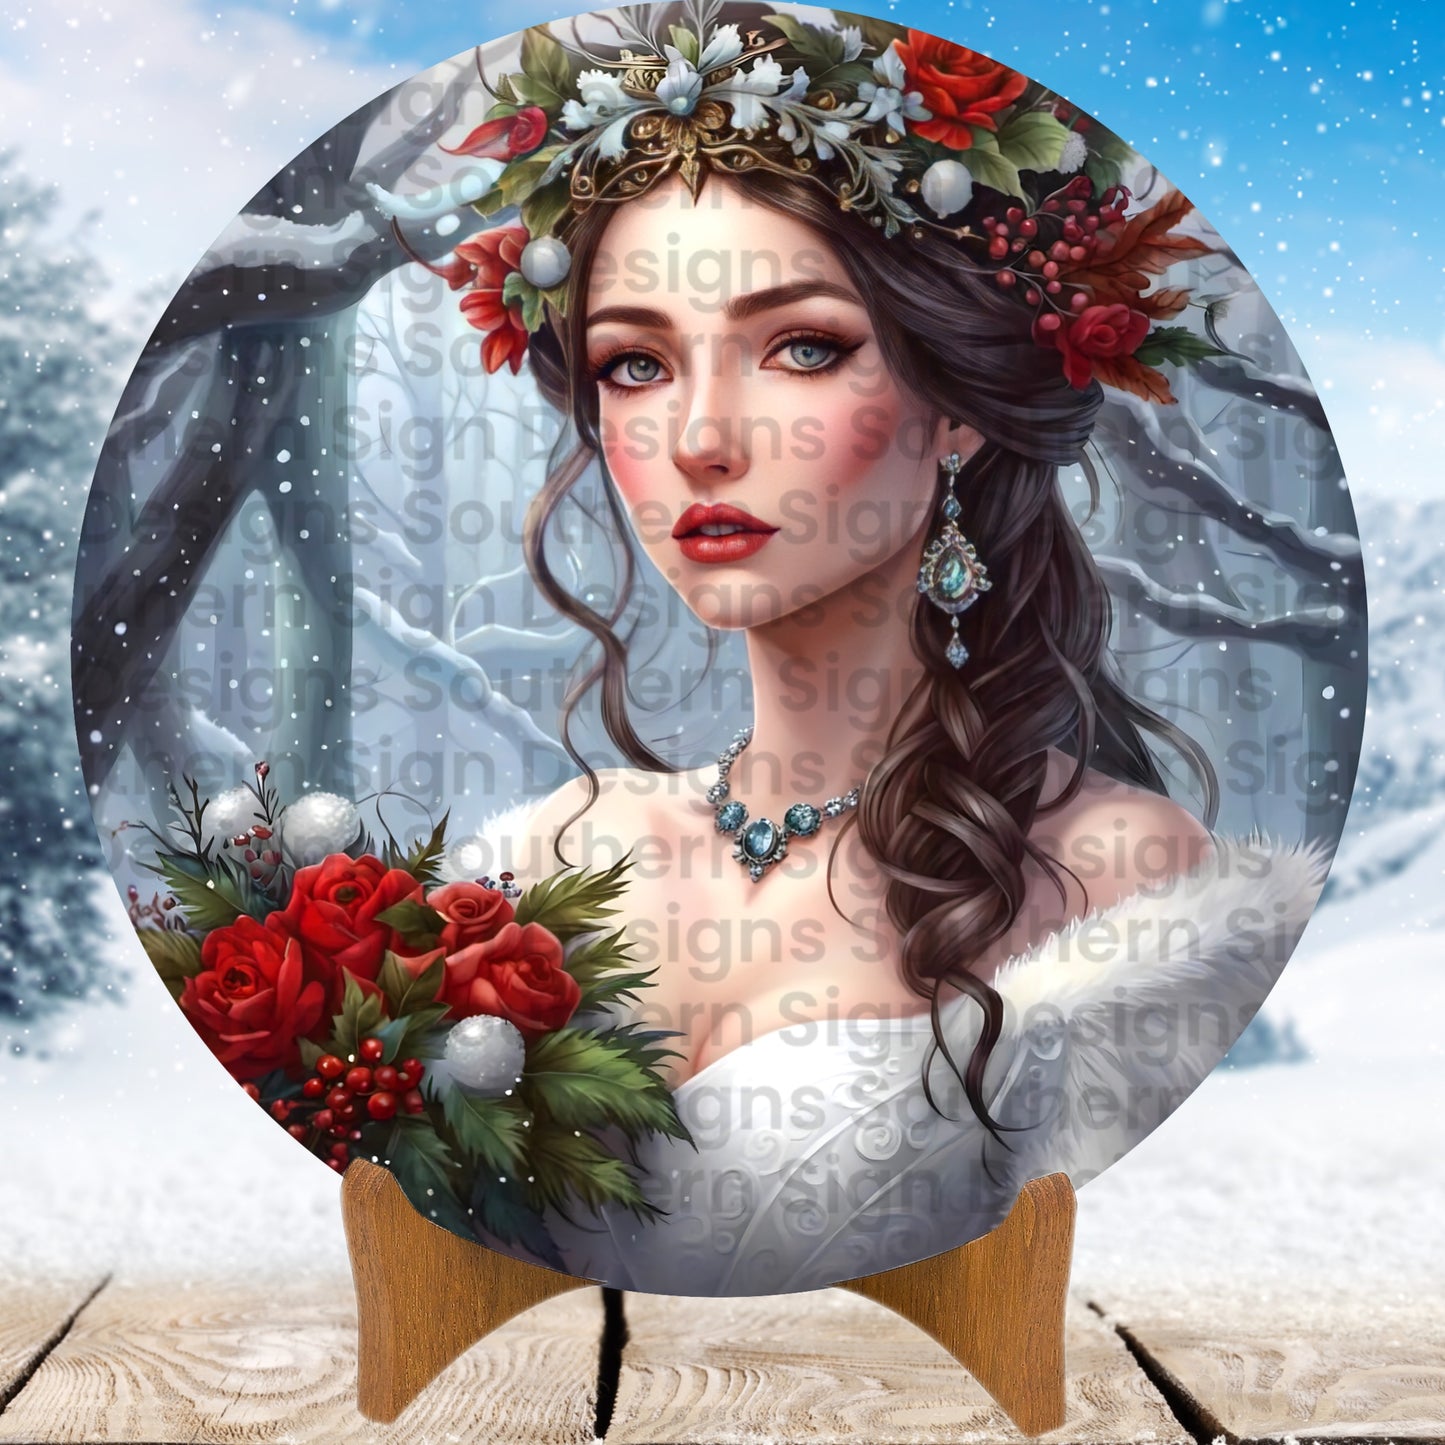 Winter Princess Winter Wreath Sign